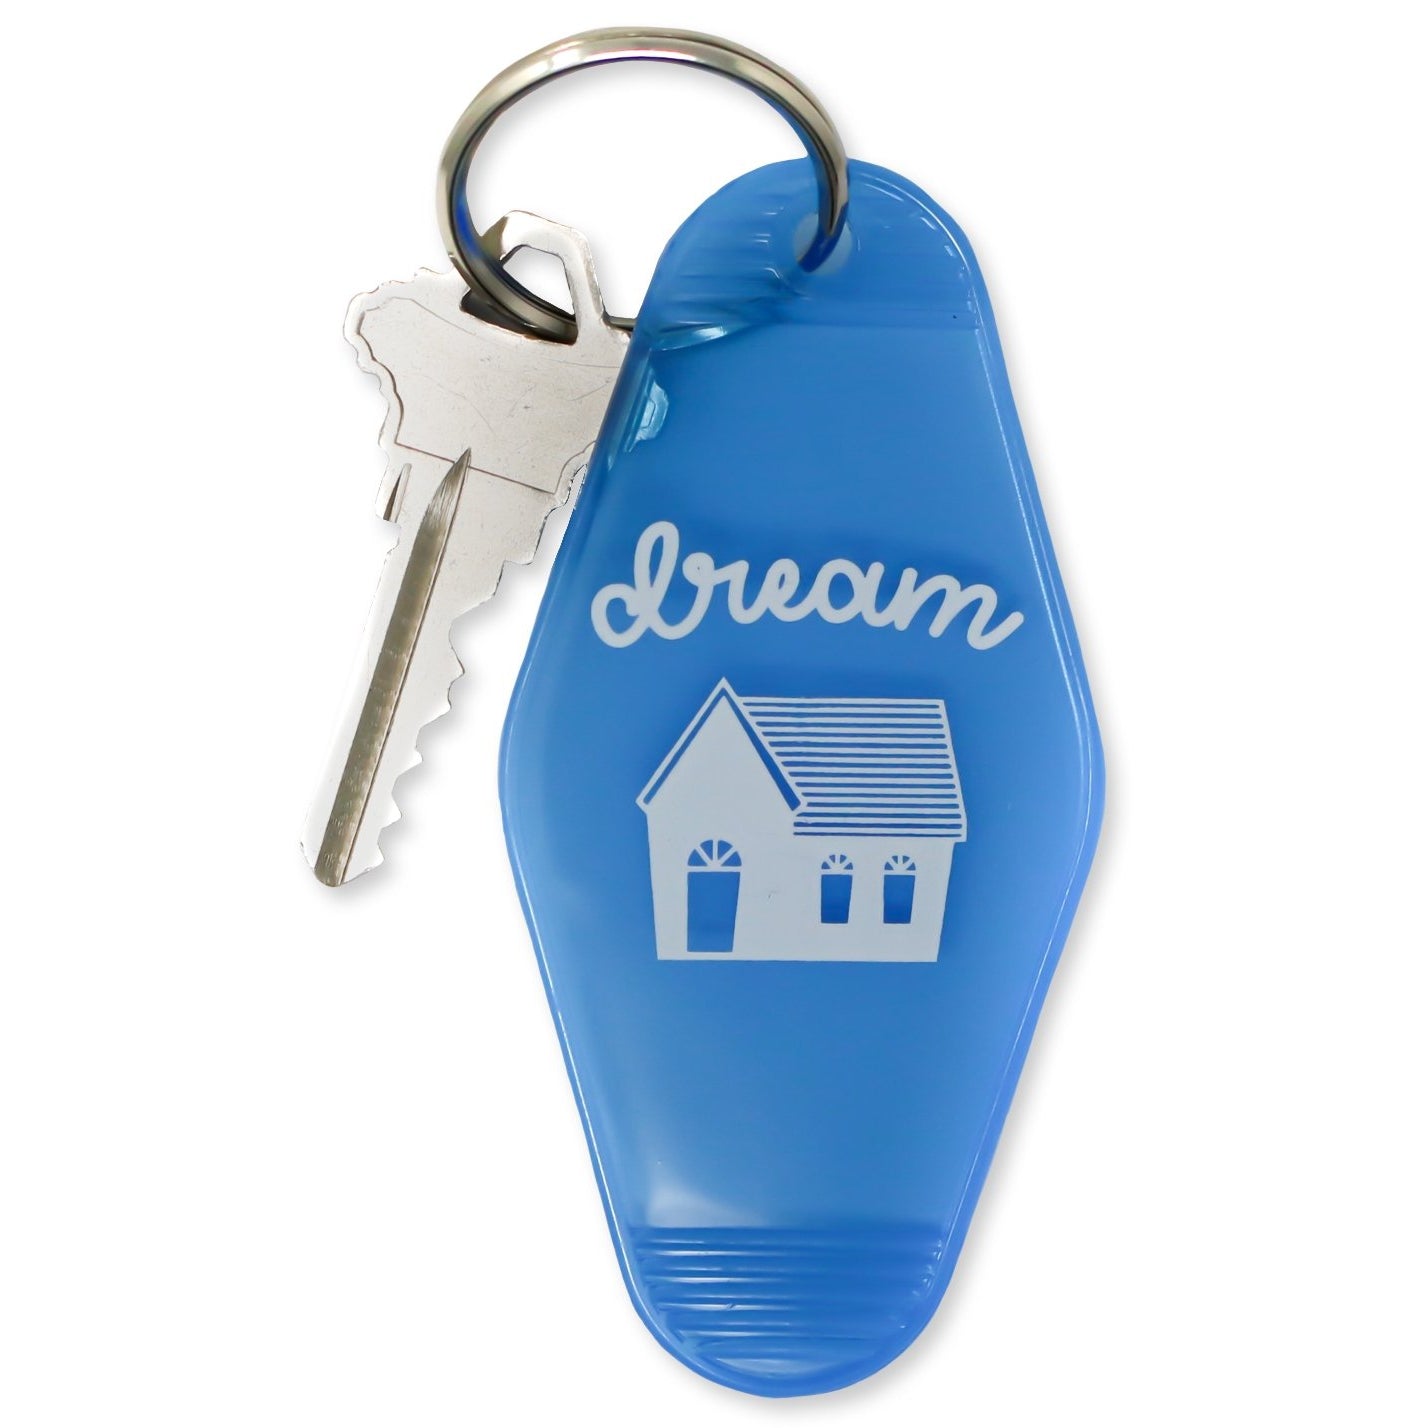 Dream House Motel Keychain in Blue